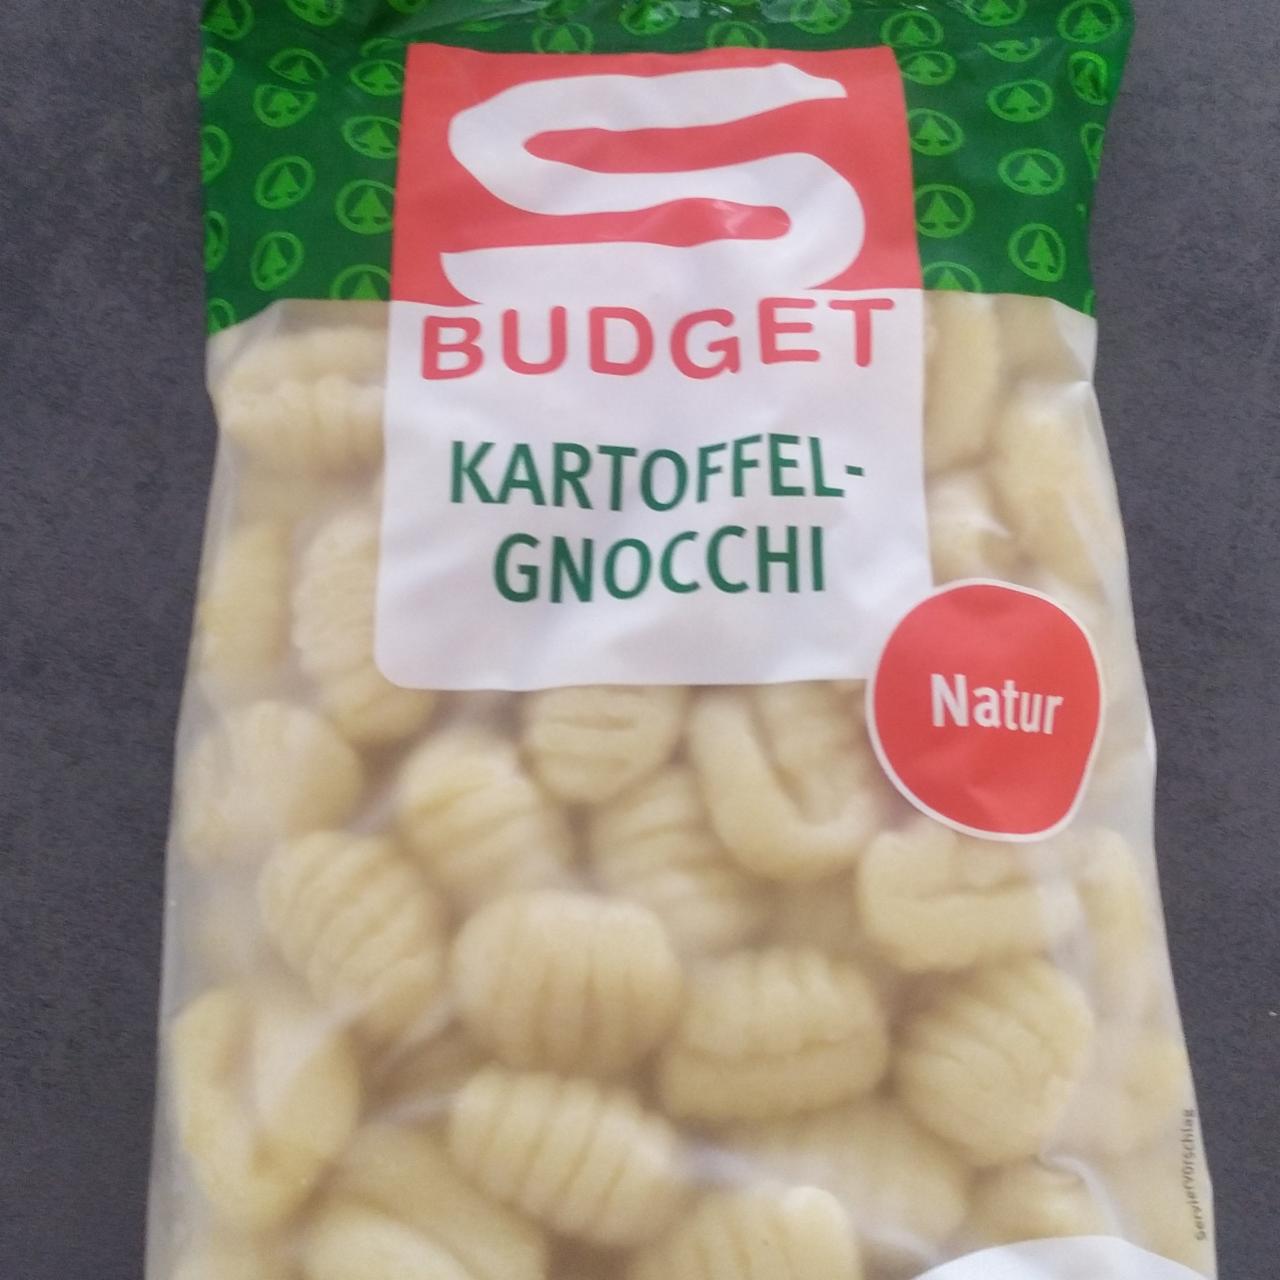 Fotografie - Kartoffel-Gnocchi S Budget